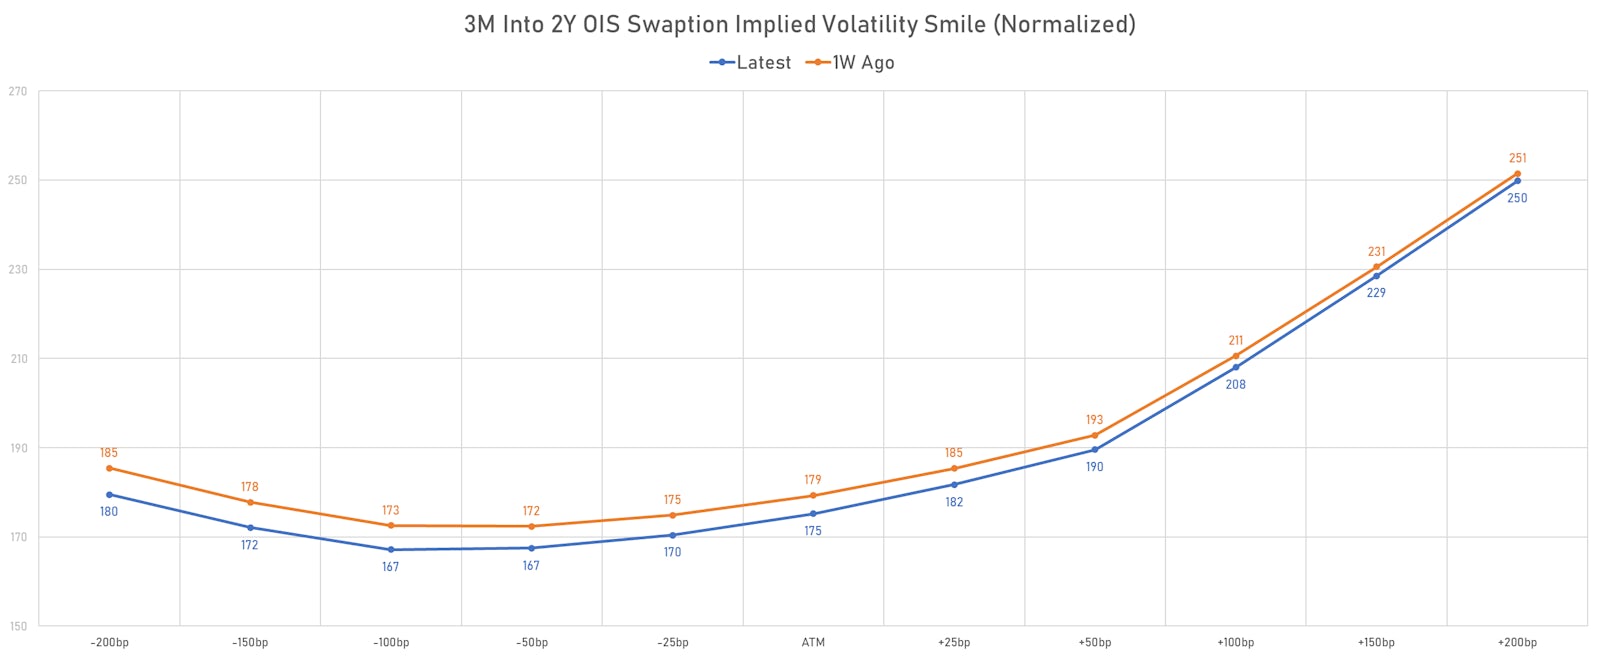 3M into 2Y OIS Swaption Implied Volatility | Sources: phipost.com, Refinitiv data